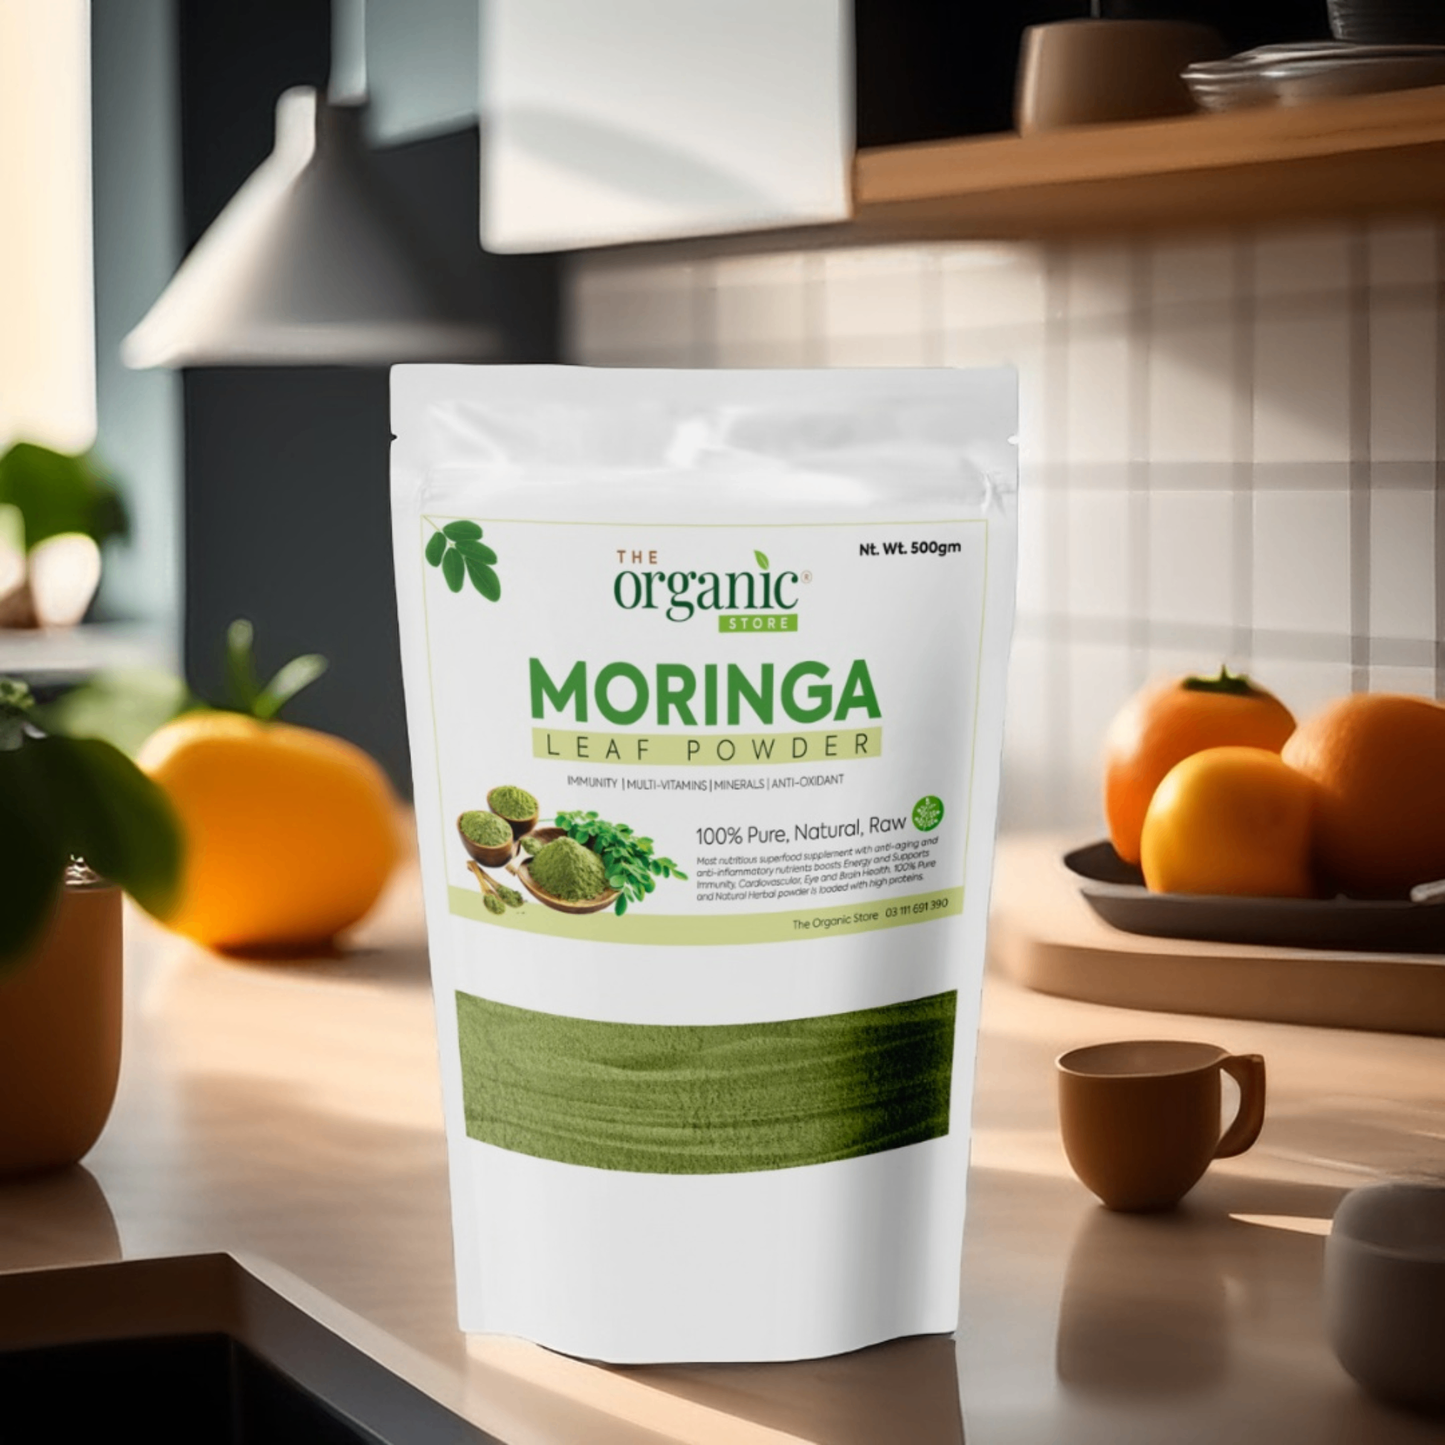 Moringa Oleifera Leaves Powder - 1 kg - Free Shipping (سوہانجنا)